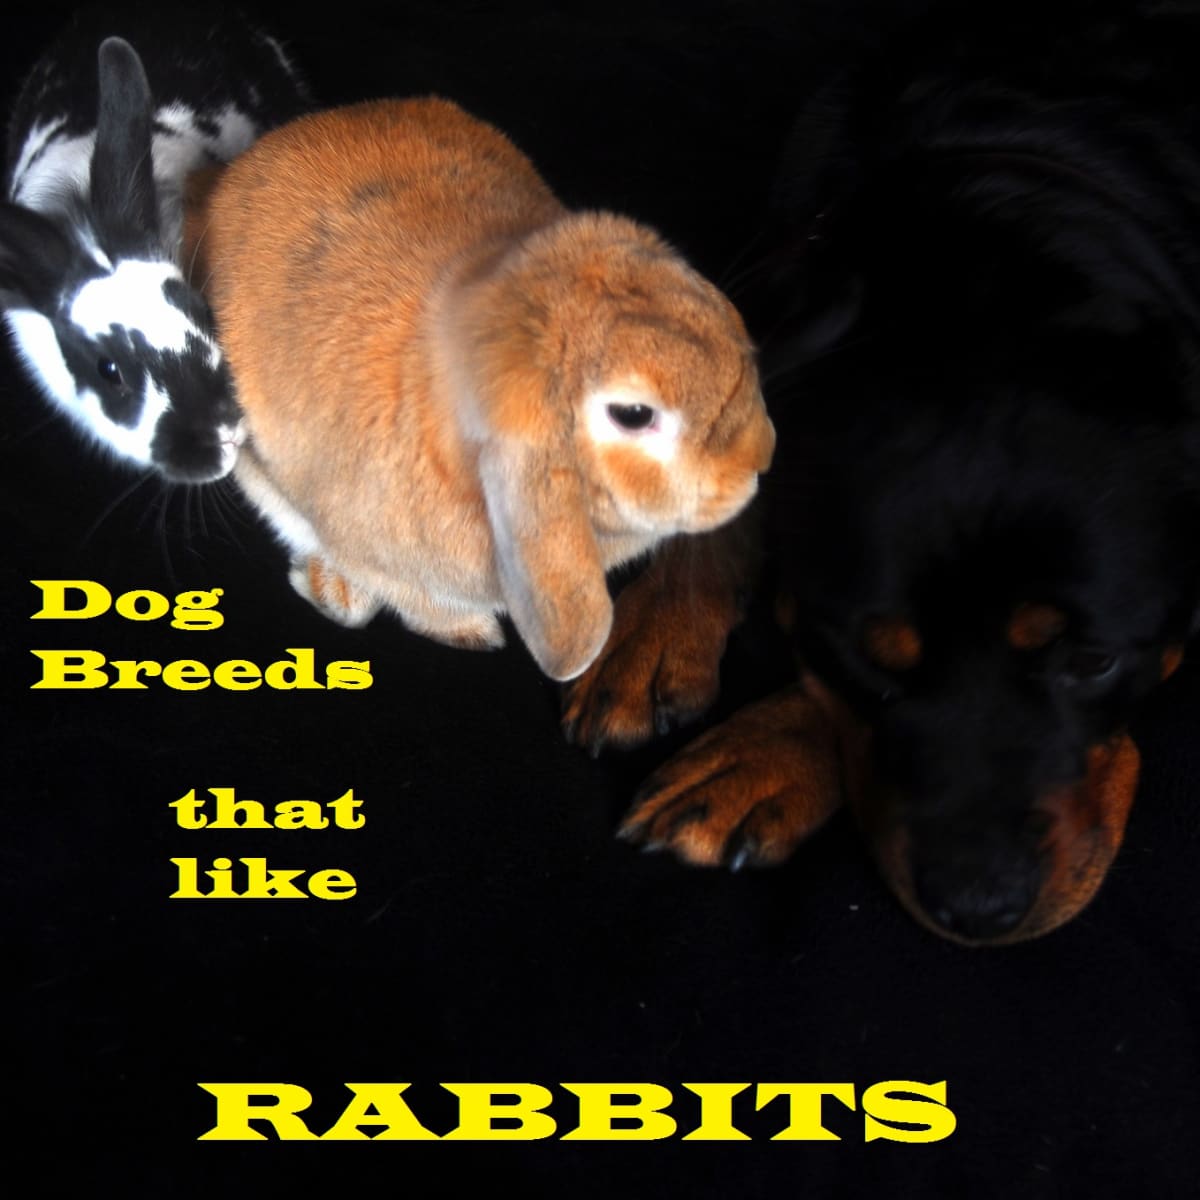 do rabbits bite dogs